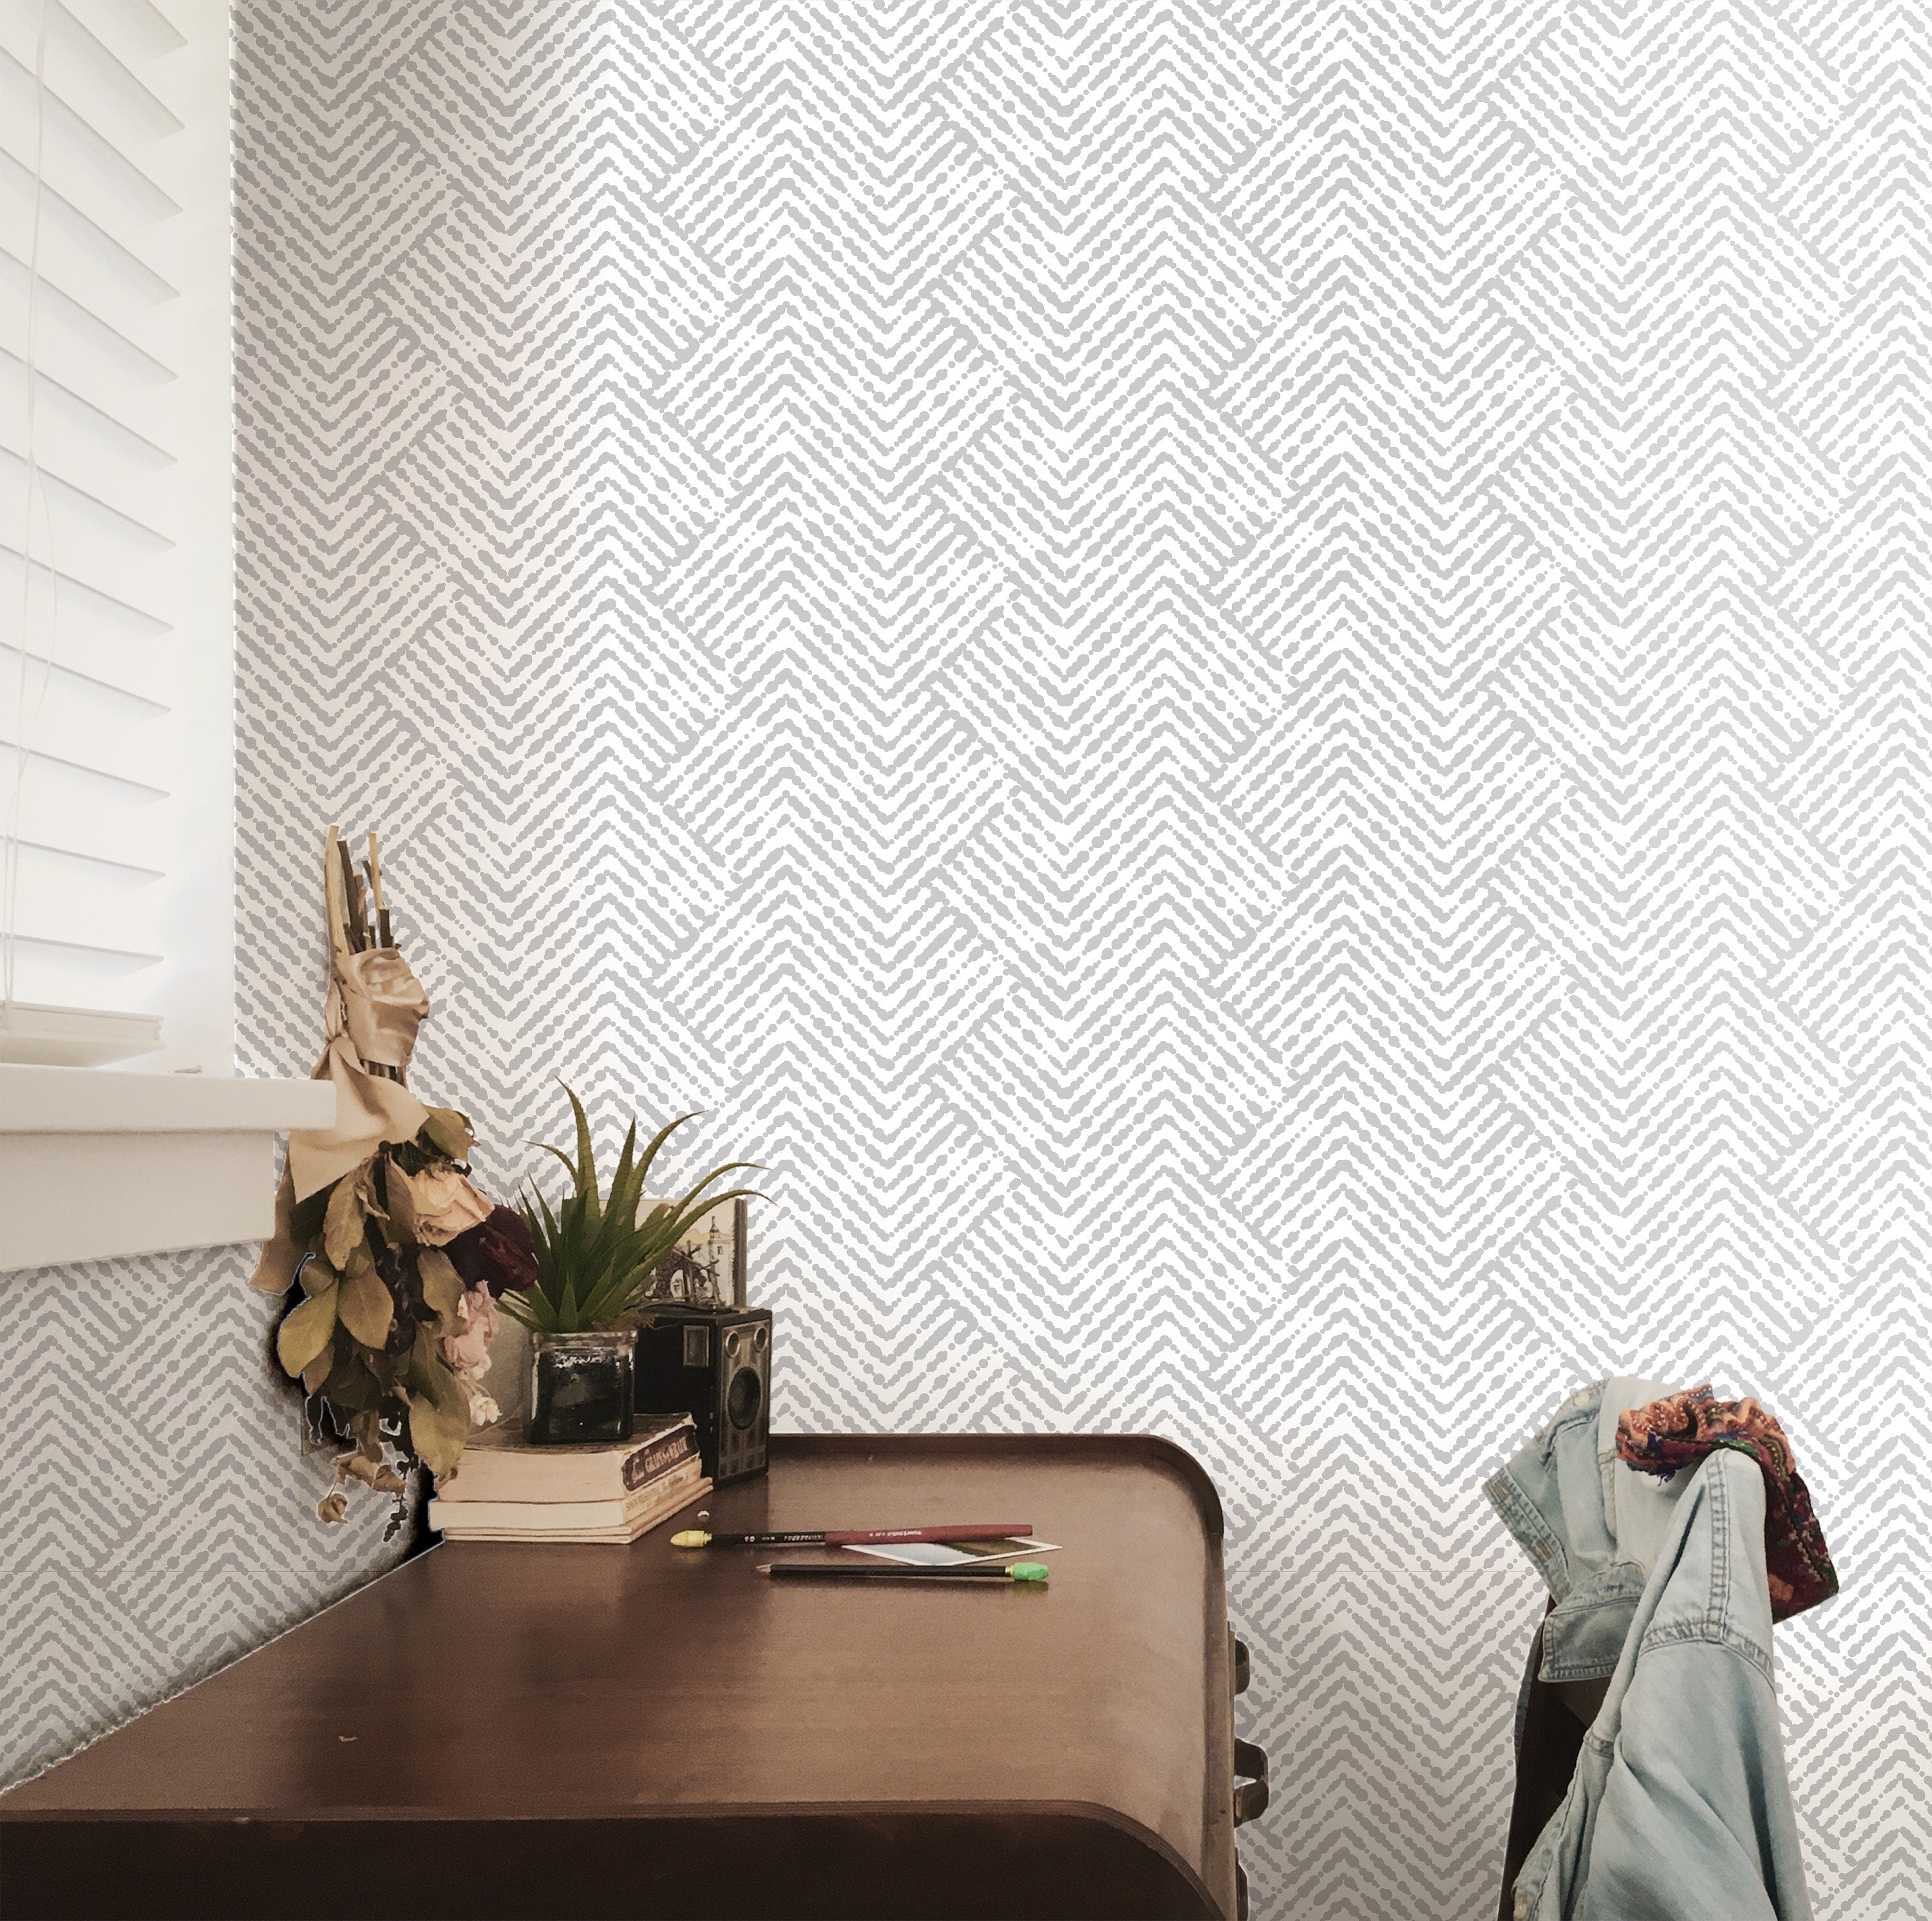 Removable Wallpaper White Gray Geometric Wallpaper | Peel And Stick Wallpaper | Adhesive Wallpaper | Wall Paper Peel Stick Wall Mural 3518 - JamesAndColors